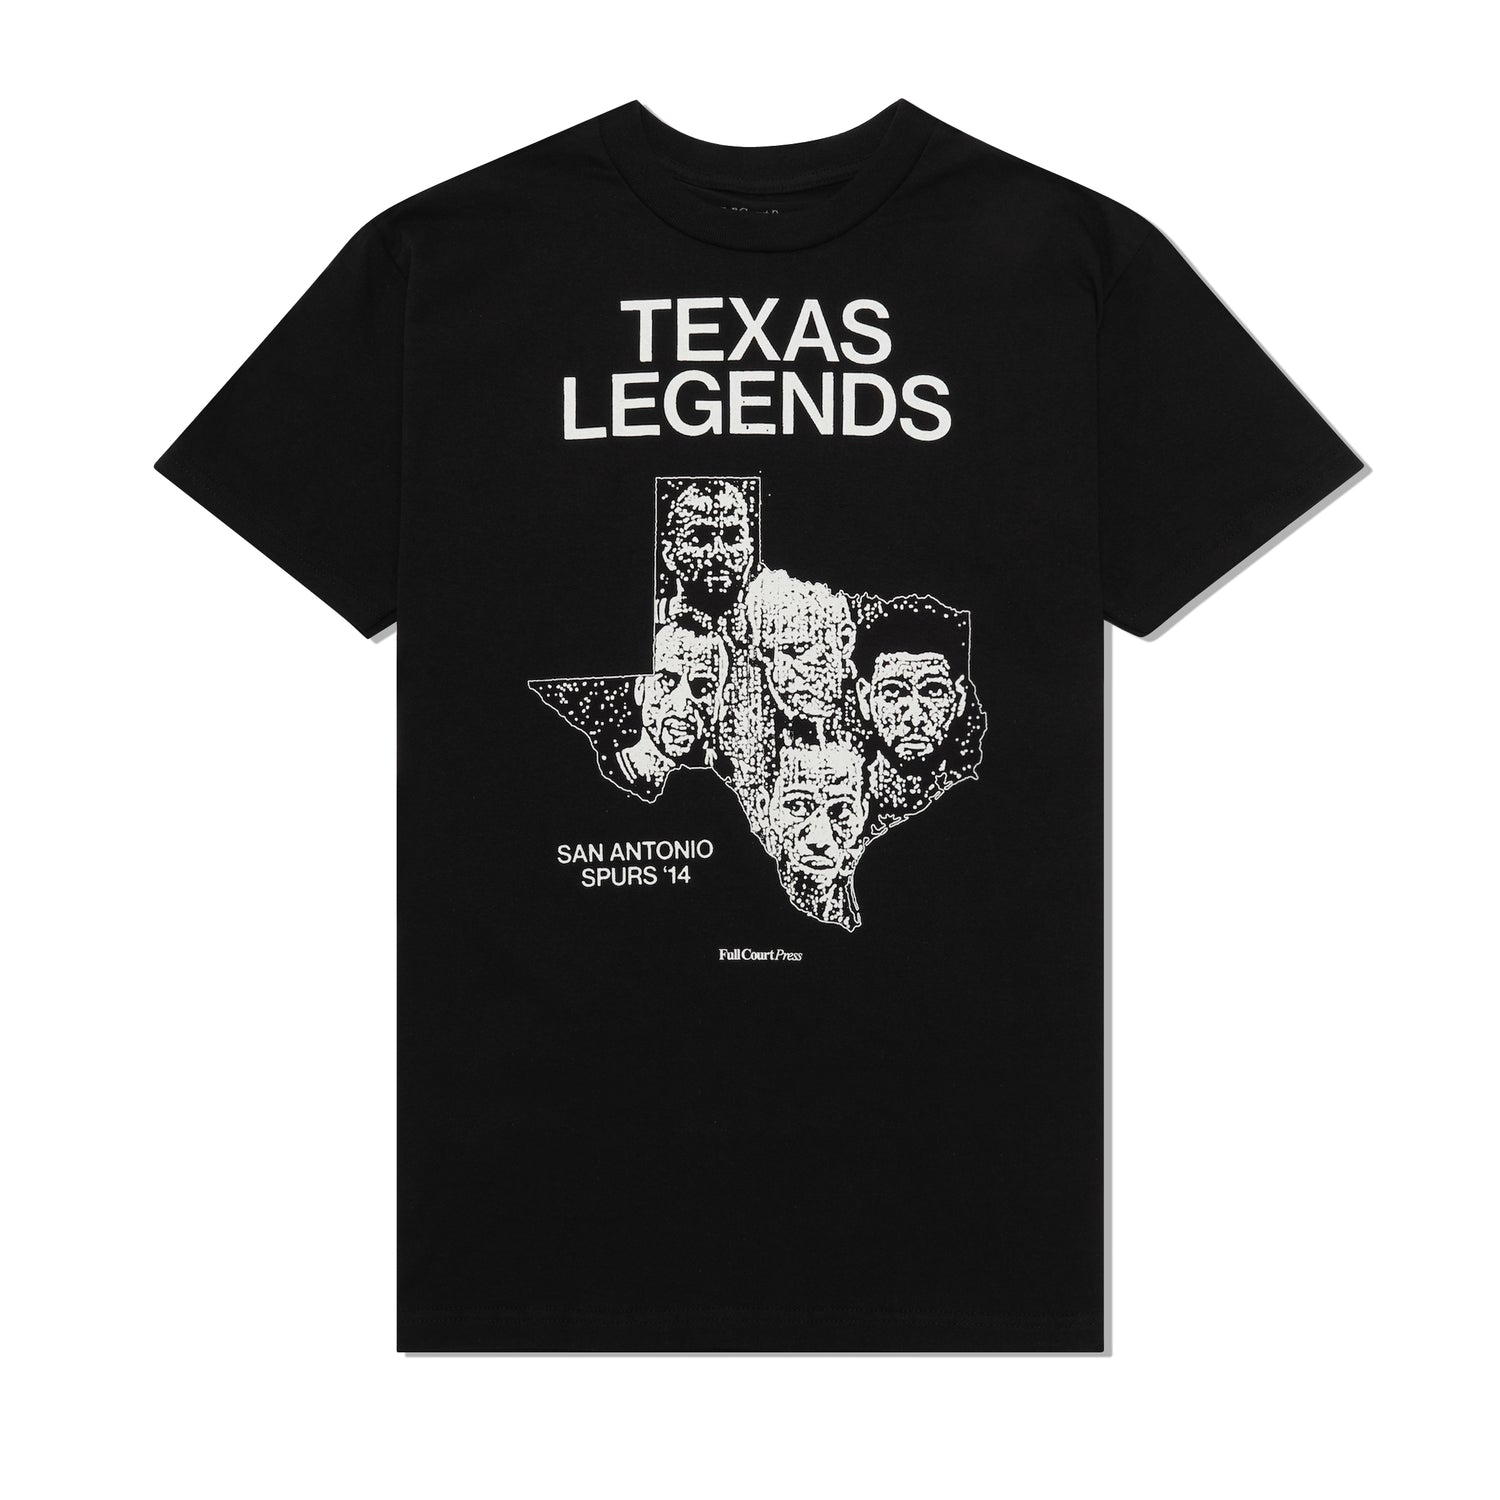 Texas Legends Tee, Black